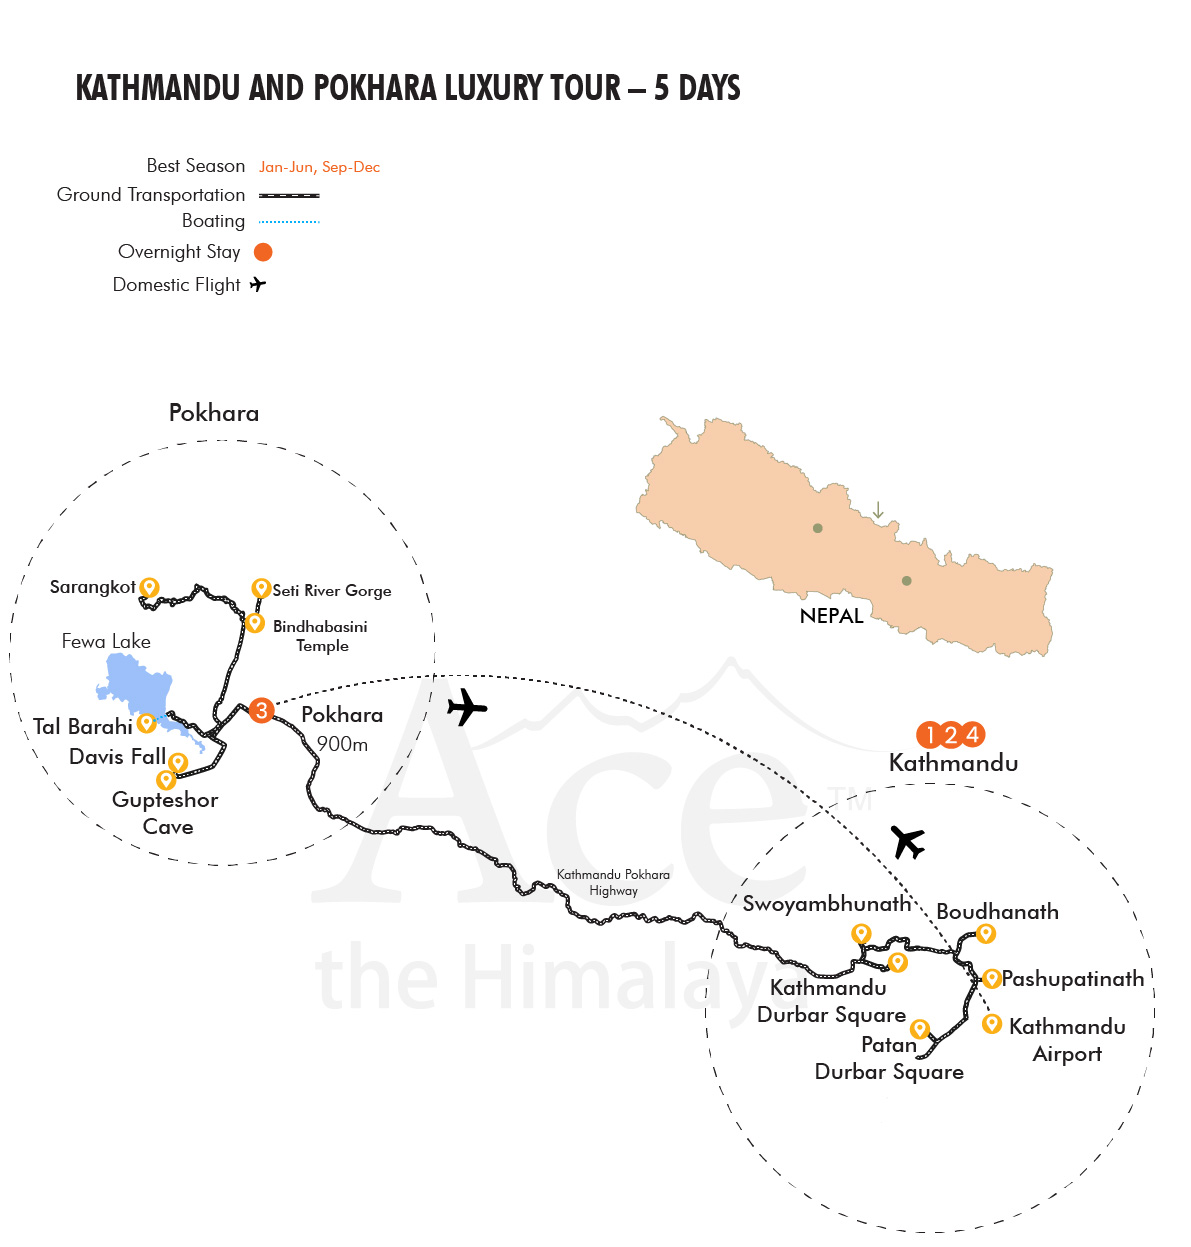 Kathmandu and Pokhara Luxury Tour